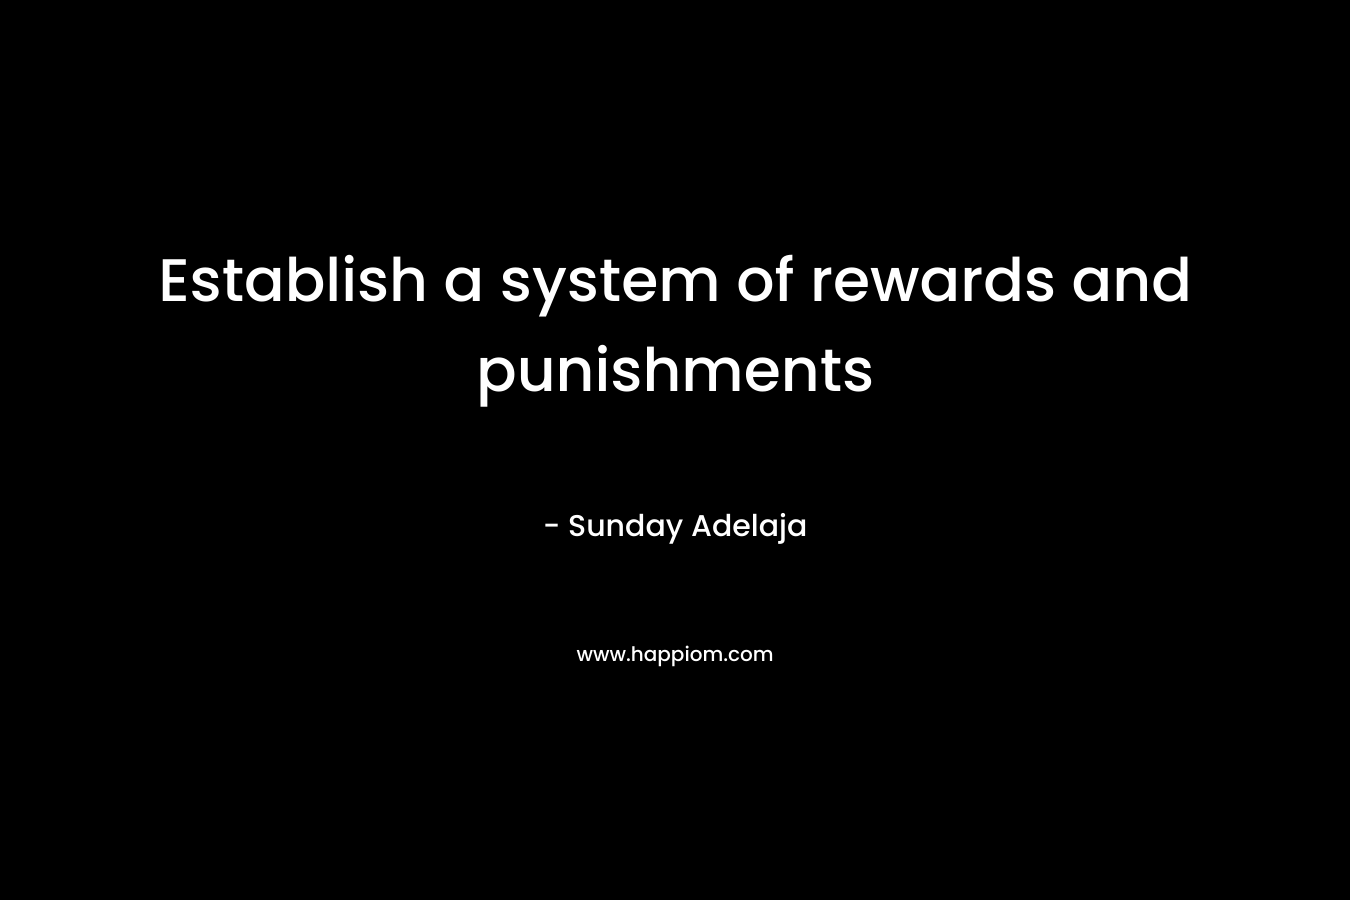 Establish a system of rewards and punishments